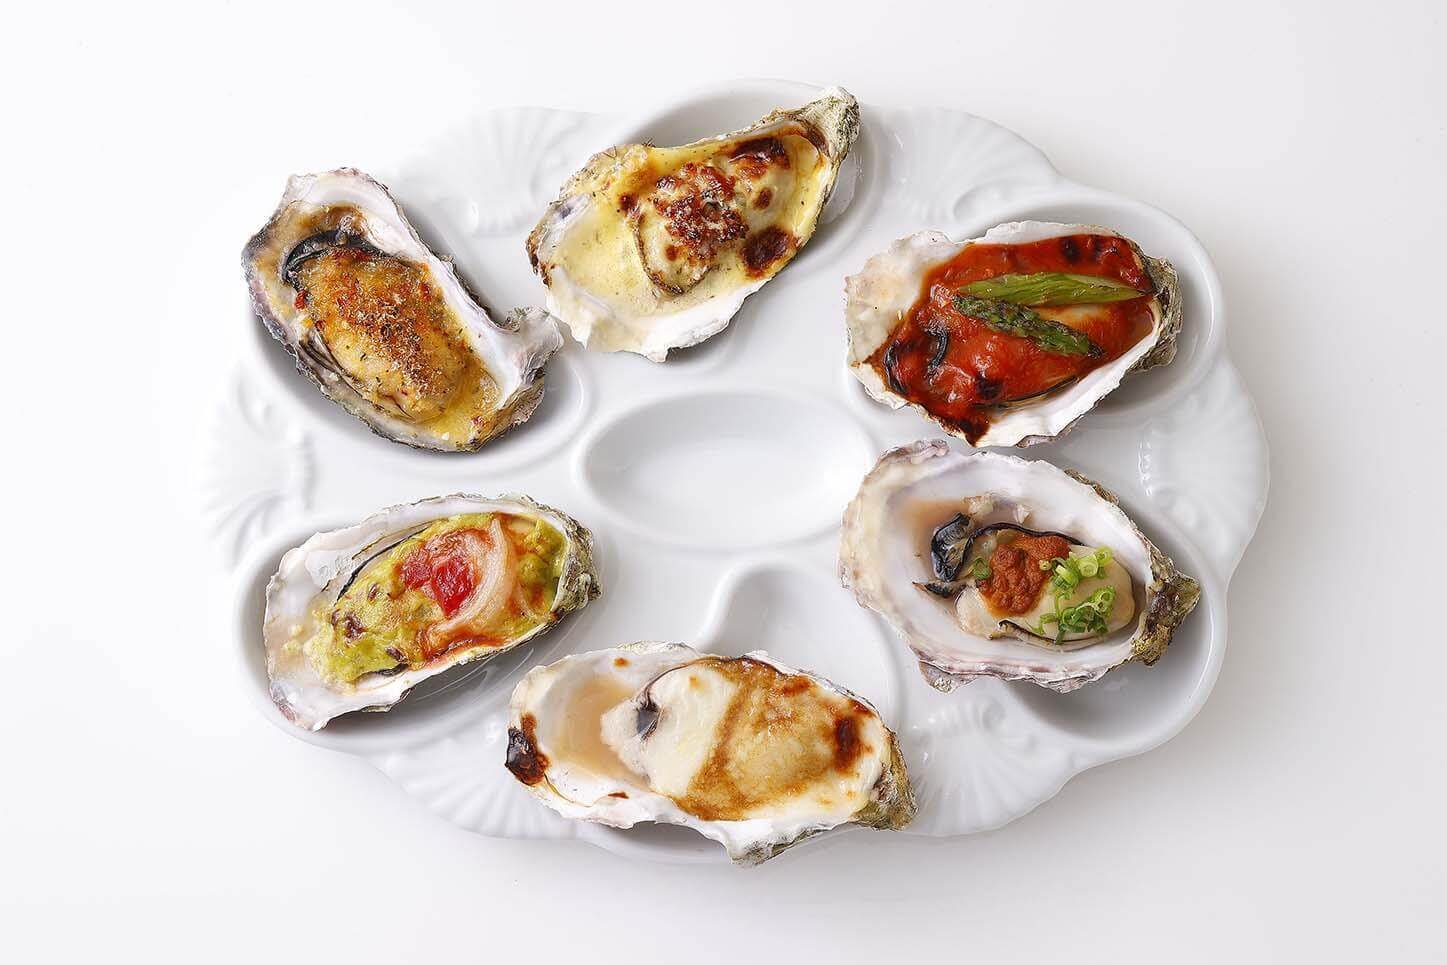 8TH SEA OYSTER Bar ココノススキノ店の『焼き牡蠣全種盛り合わせ』